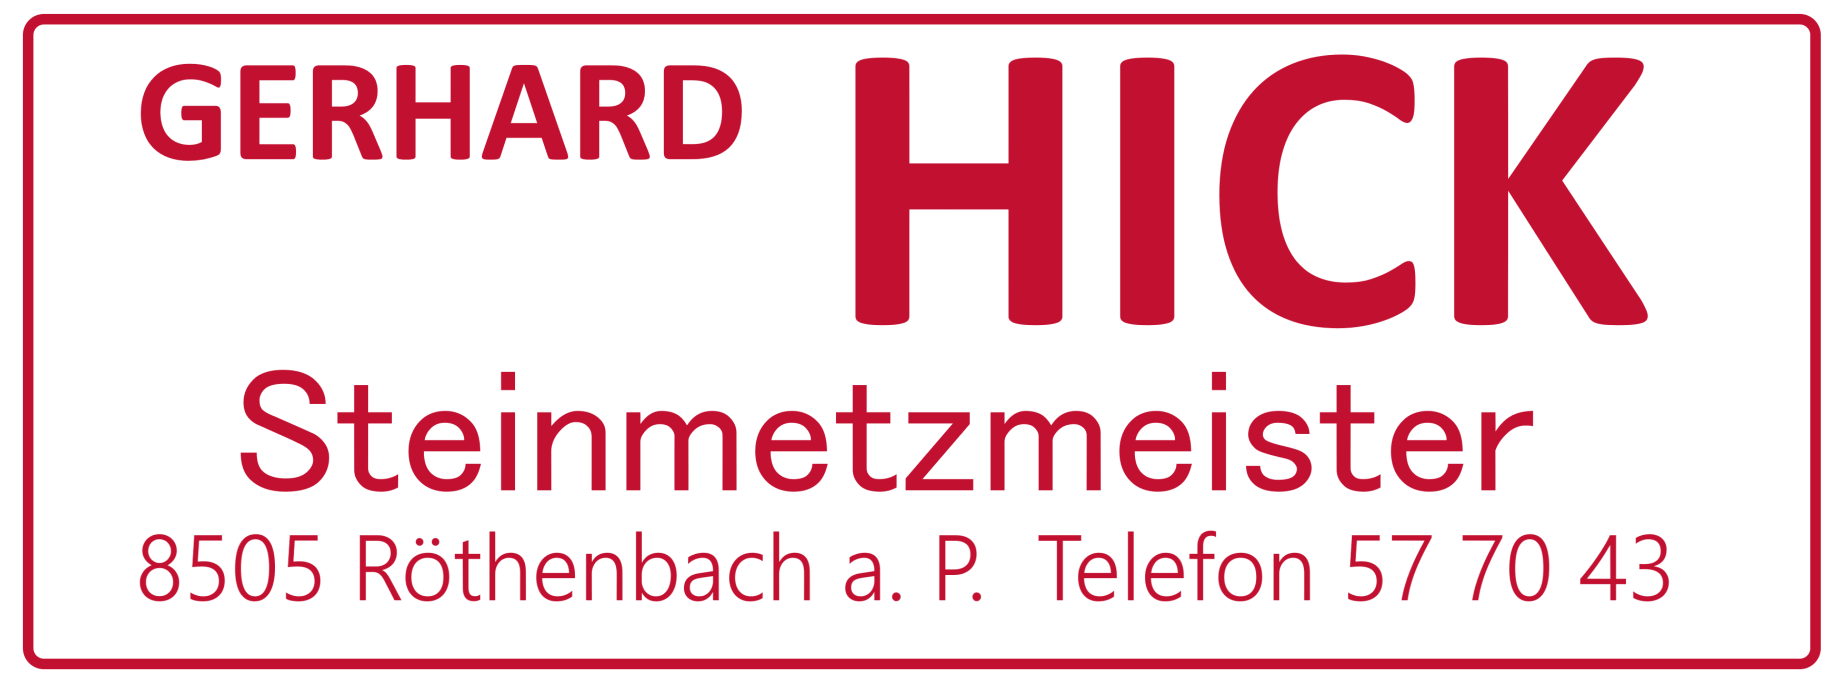 Logo Gehard Hick